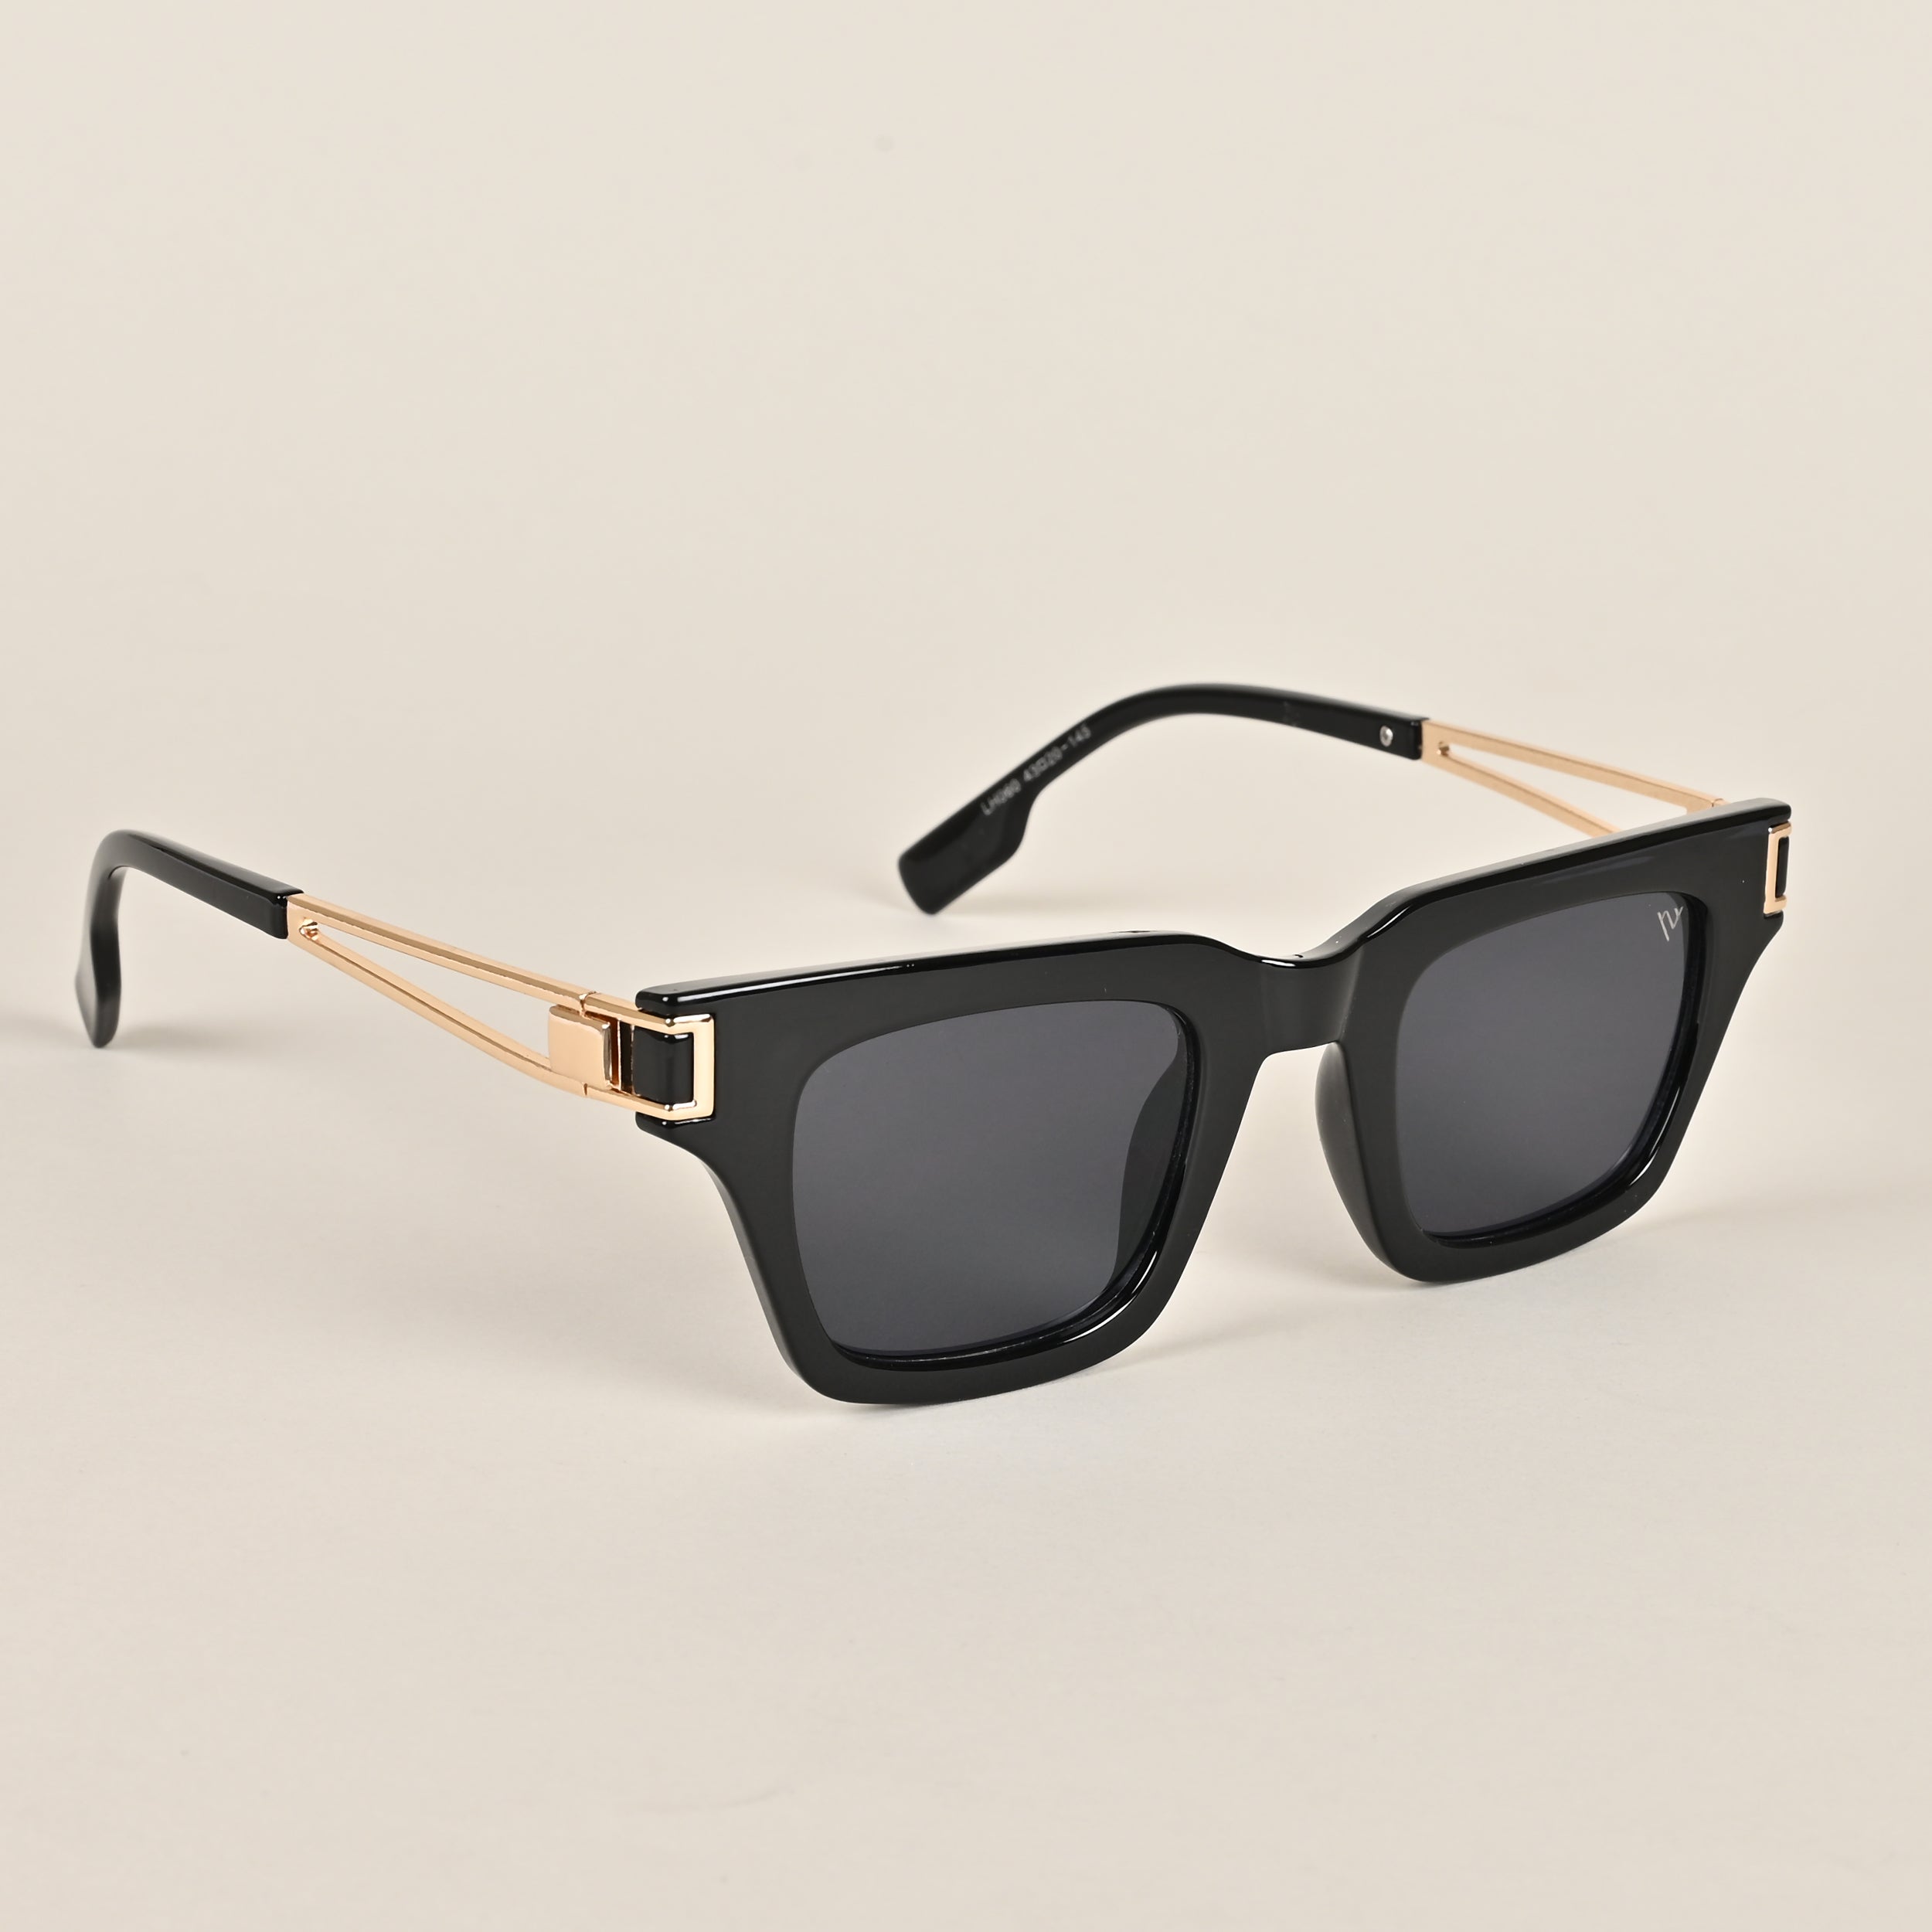 Voyage Black Wayfarer Sunglasses - MG3924